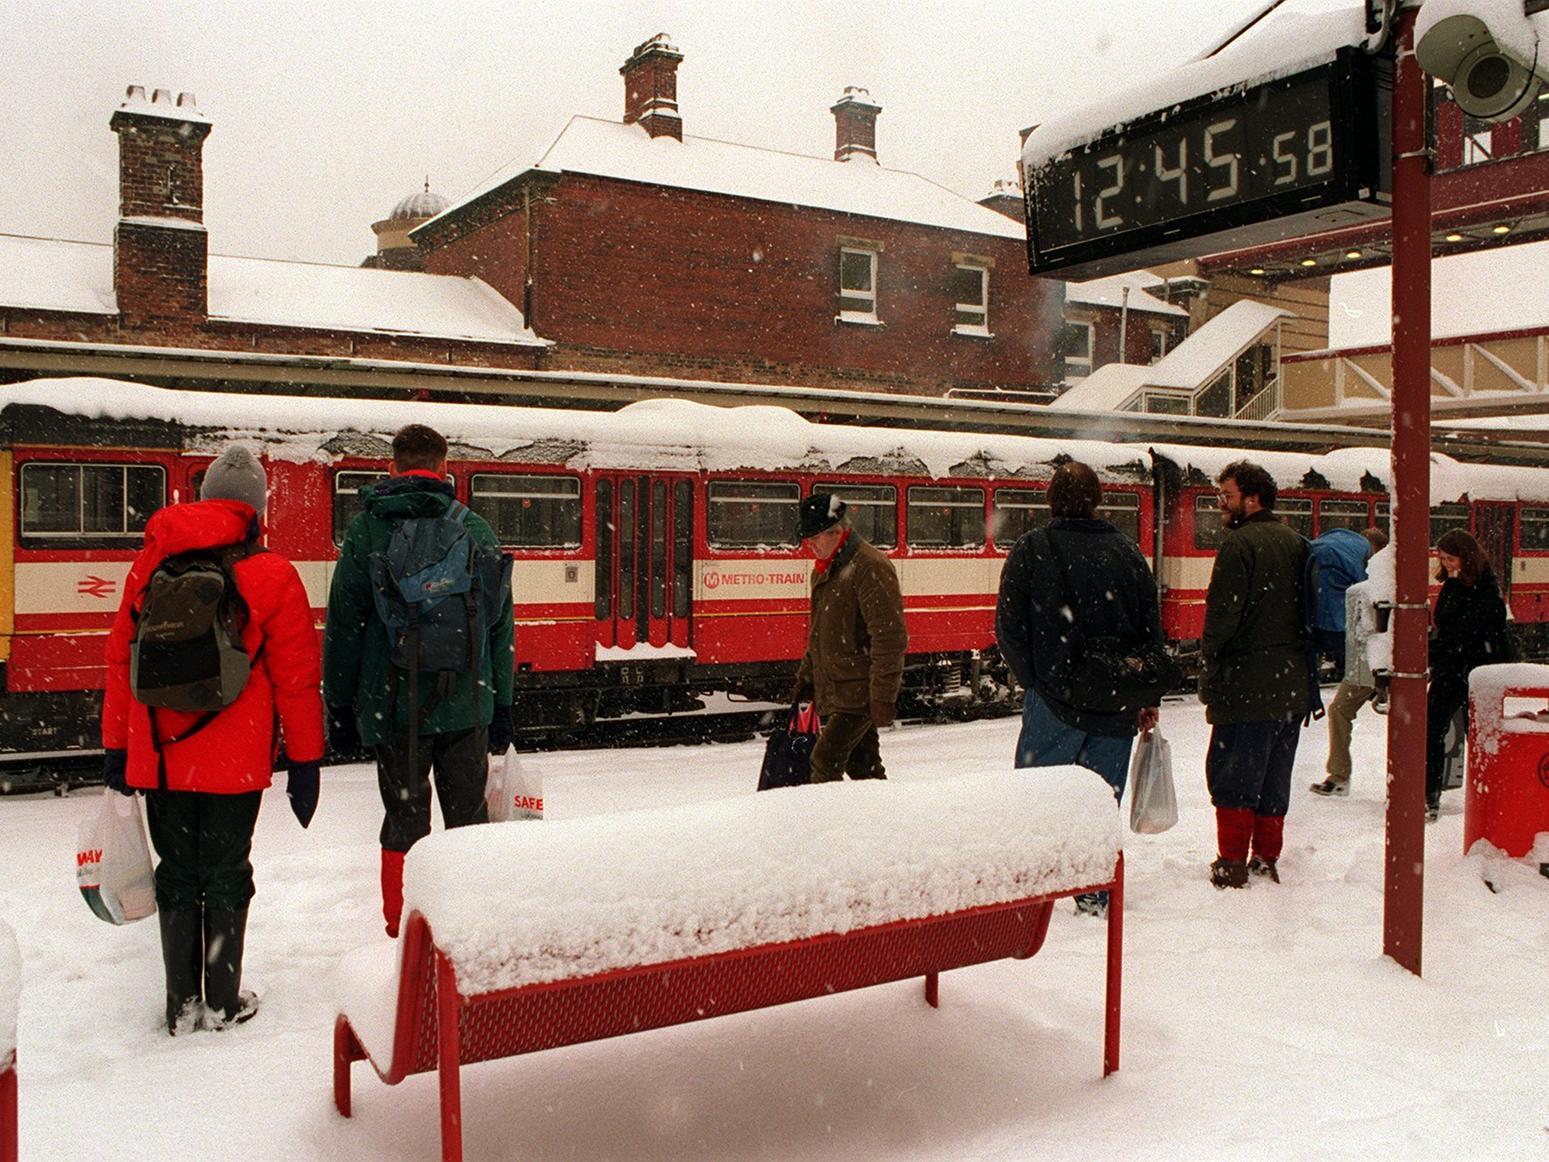 Despite the Siberian conditions trains were still running between Leeds and York.